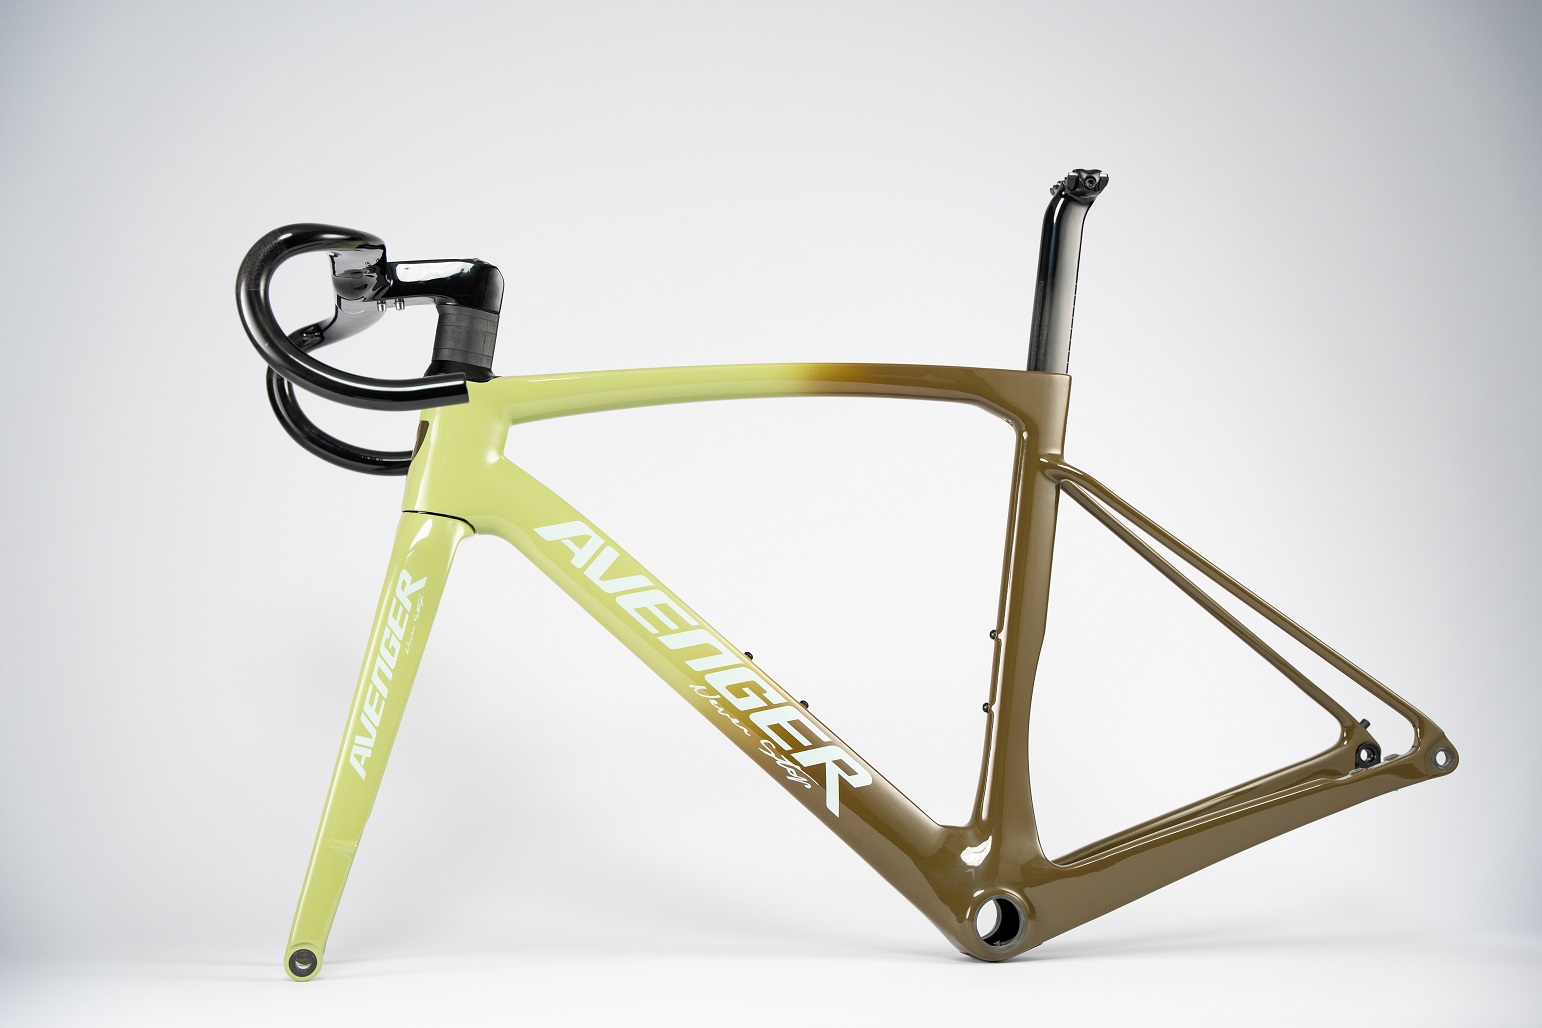 R7 for New painting design Full carbon Aero road bike frame and fork Hongfu bikes